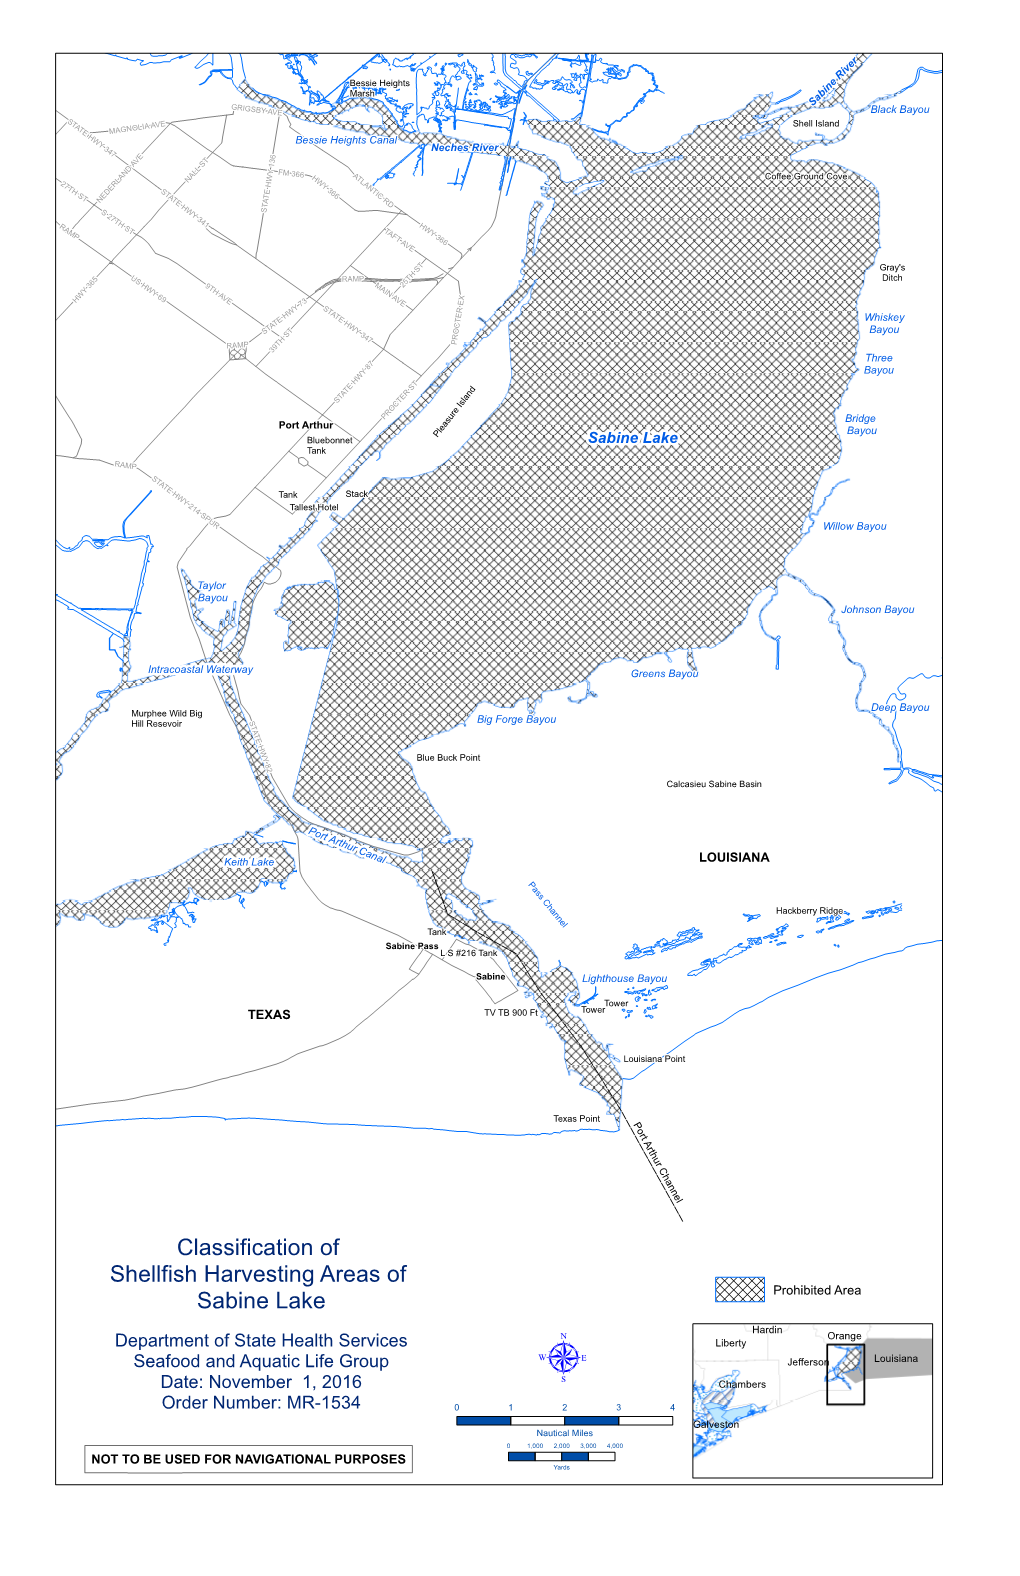 Classification of Shellfish Harvesting Areas of Sabine Lake